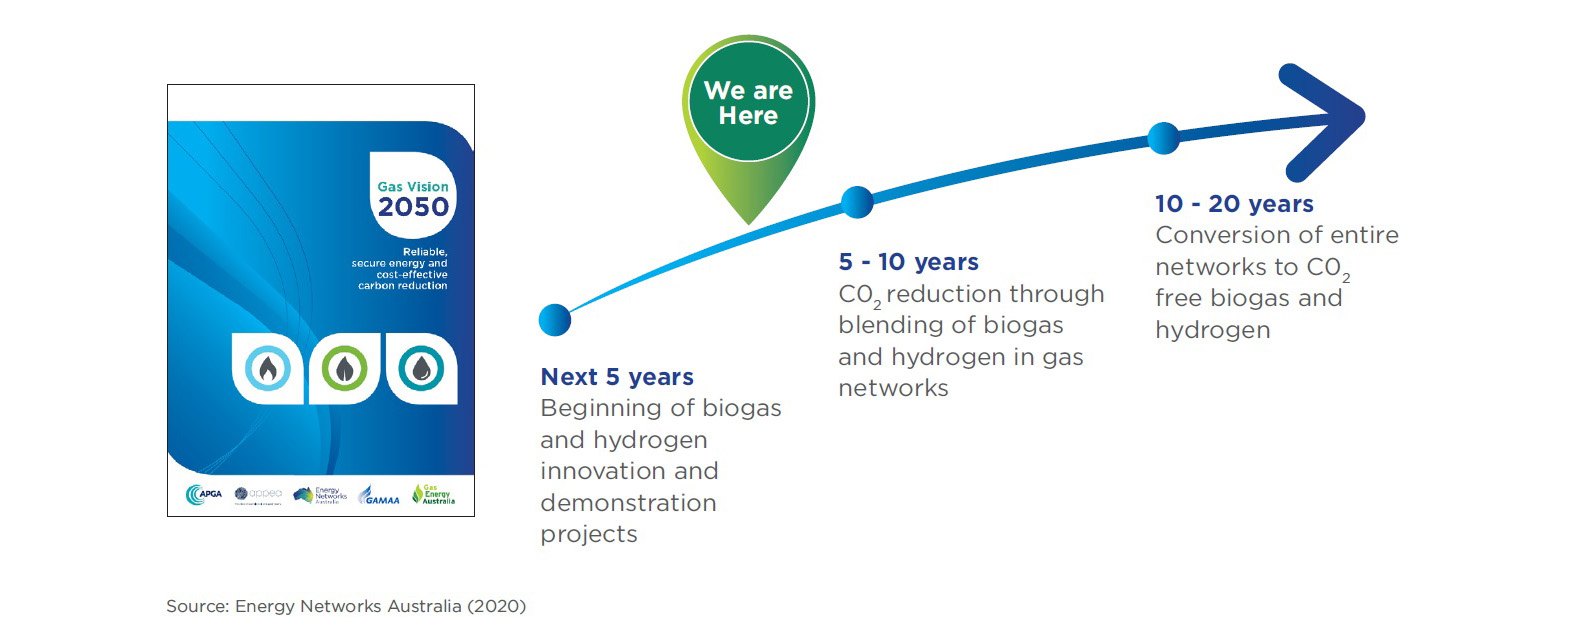 Australia: Gas Vision 2050